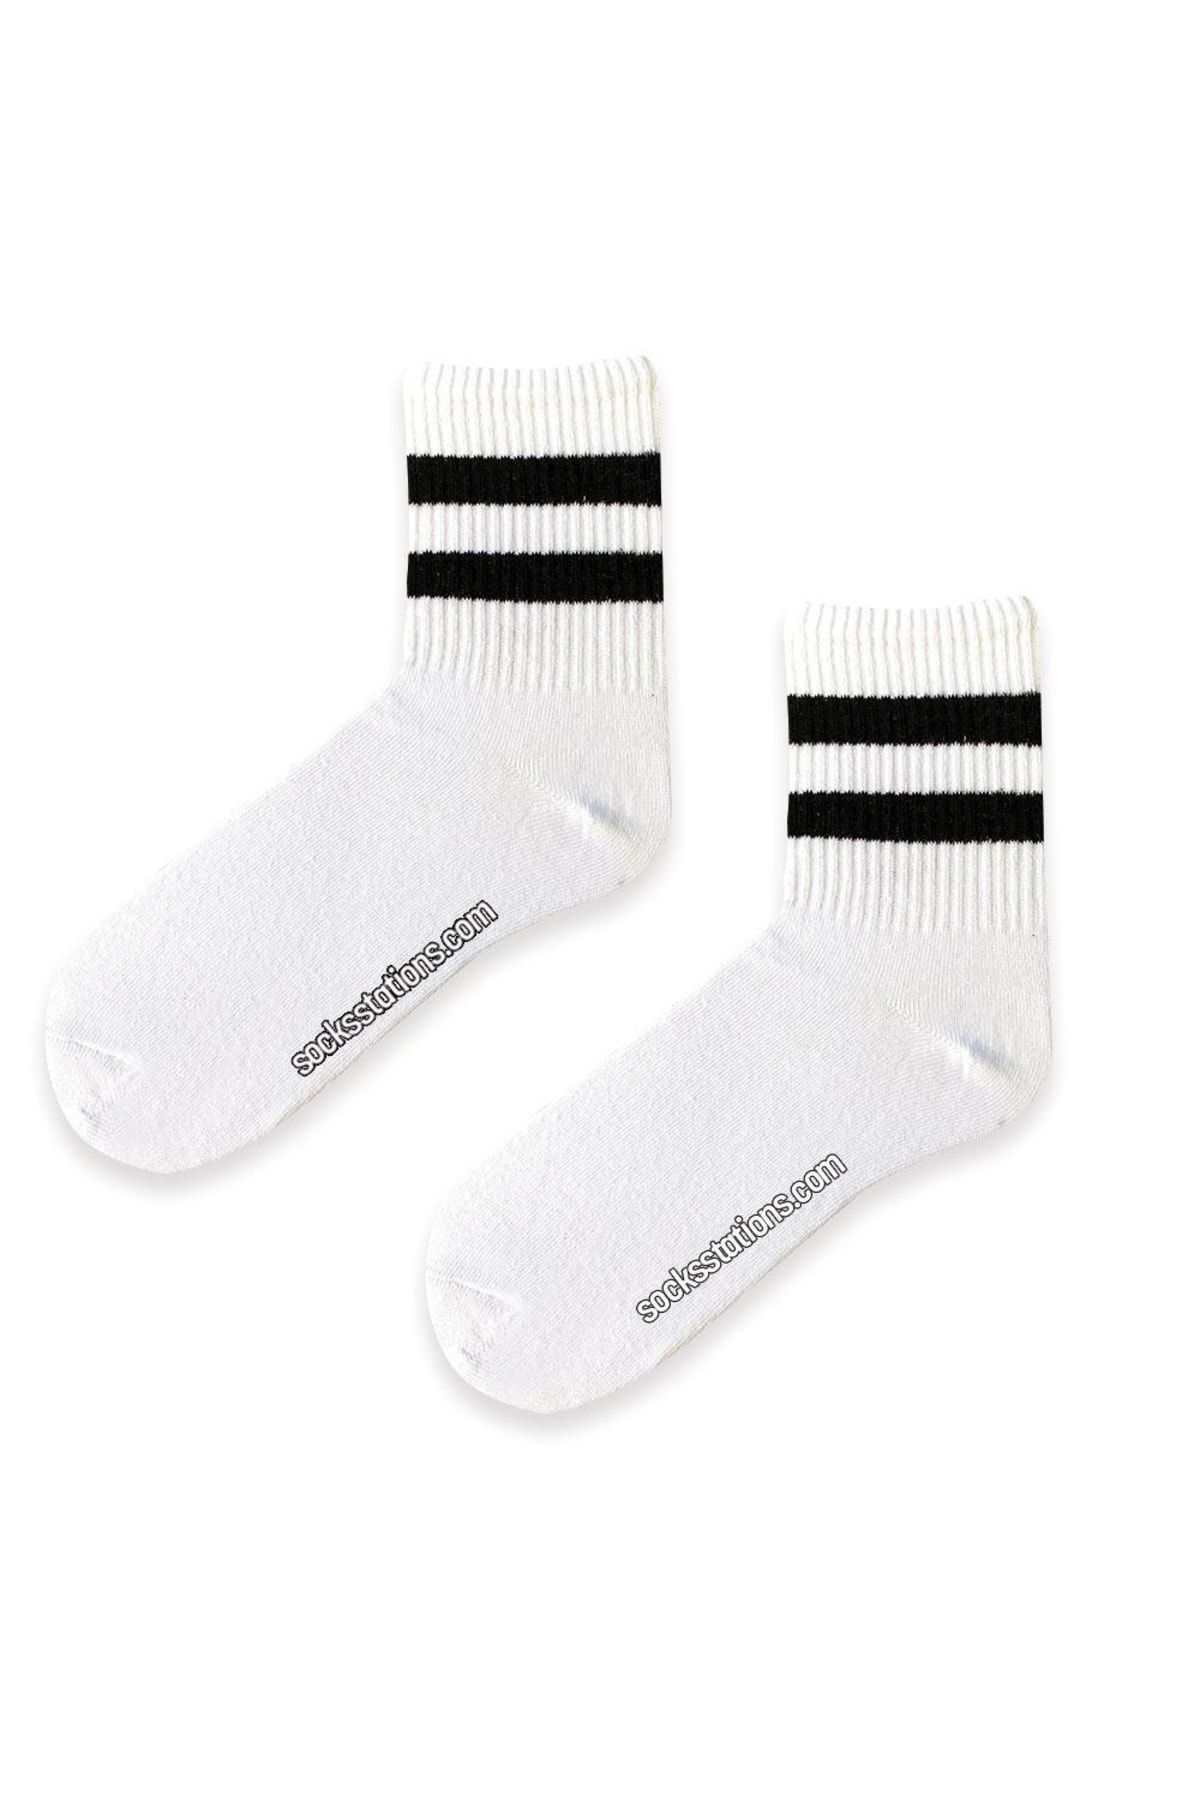 Socks Stations Ünisex Beyaz Renkli , Siyah Kalın Çizgili Uzun Kolej Spor Çorap